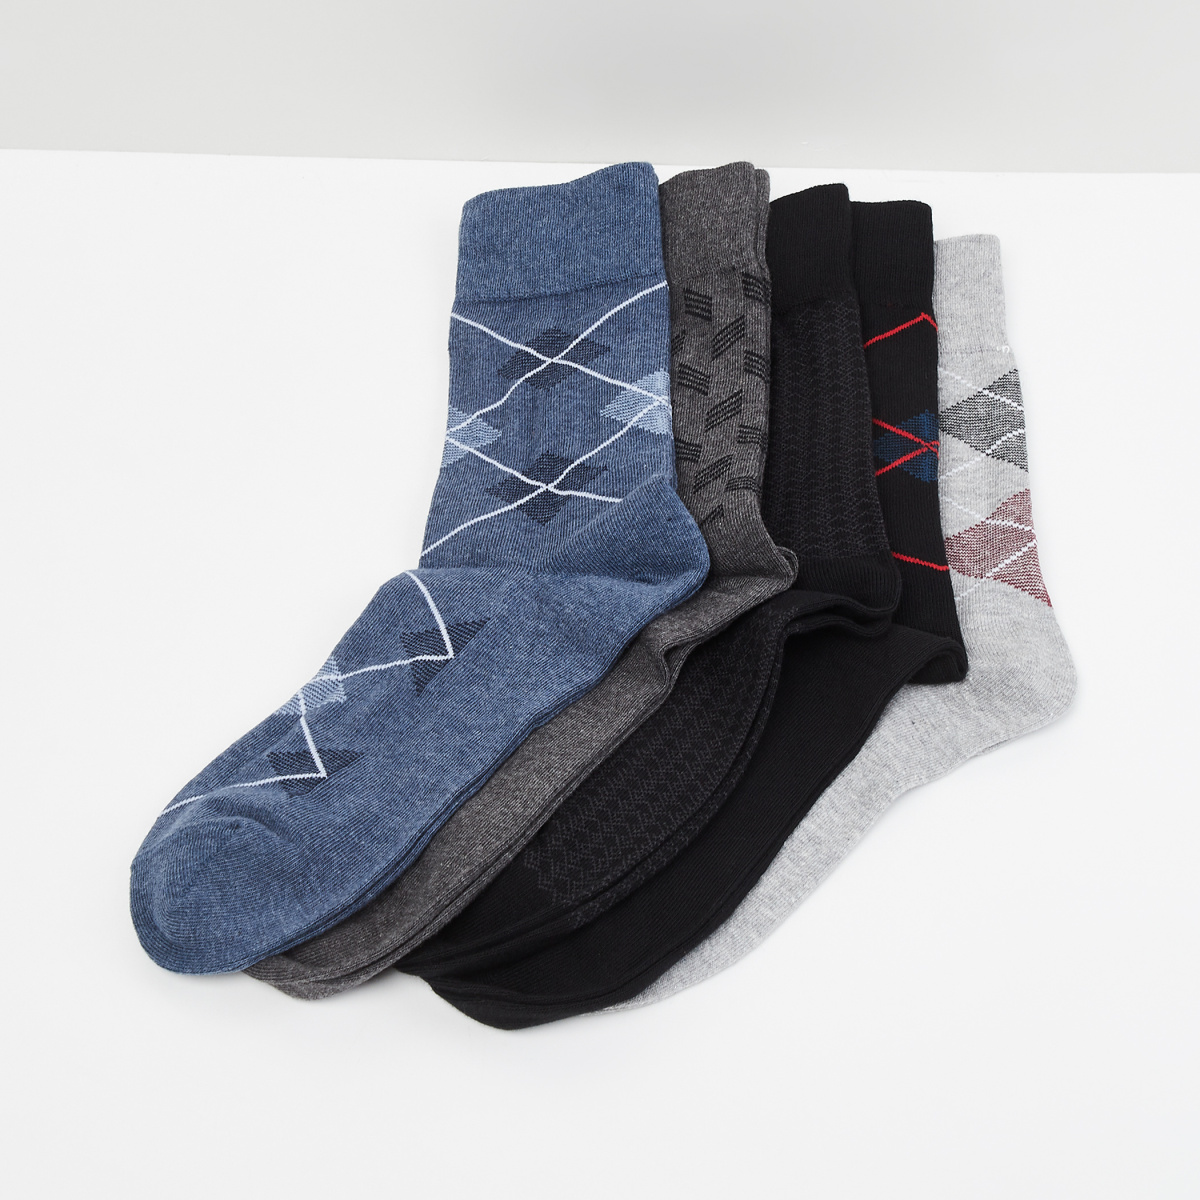 MAX Patterned Socks - Set of 5